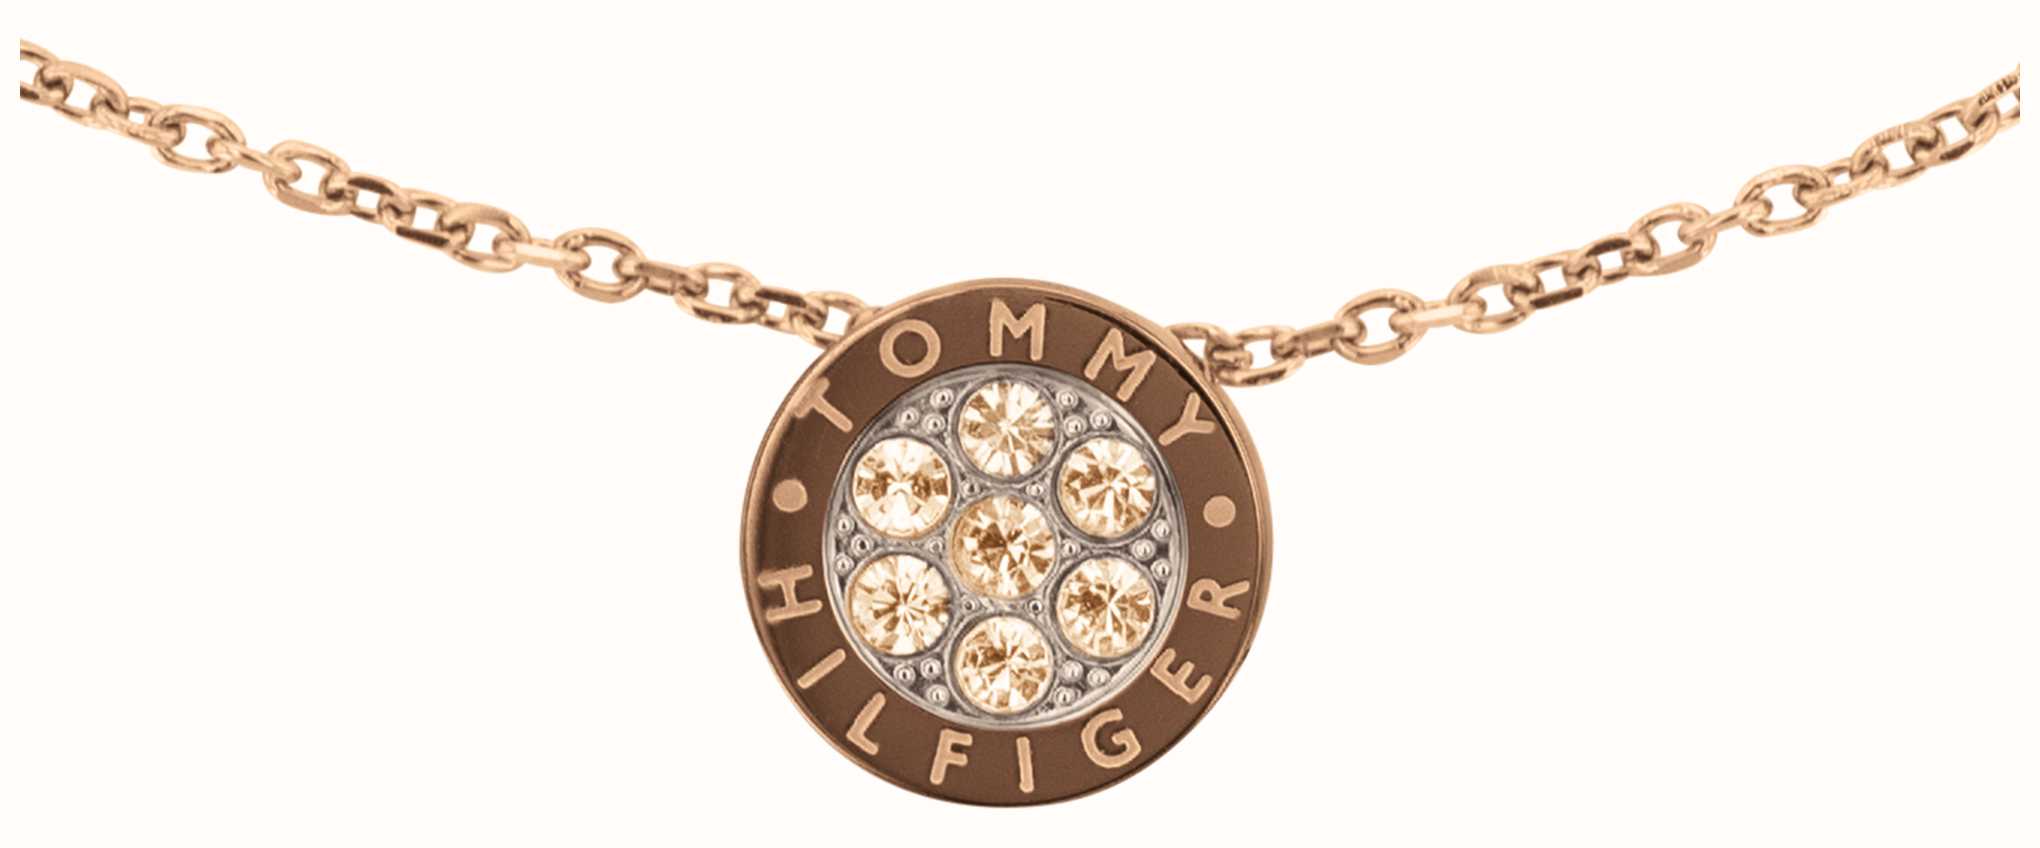 Tommy Hilfiger Gold Plated Contrast Link Chain Bracelet 2780788